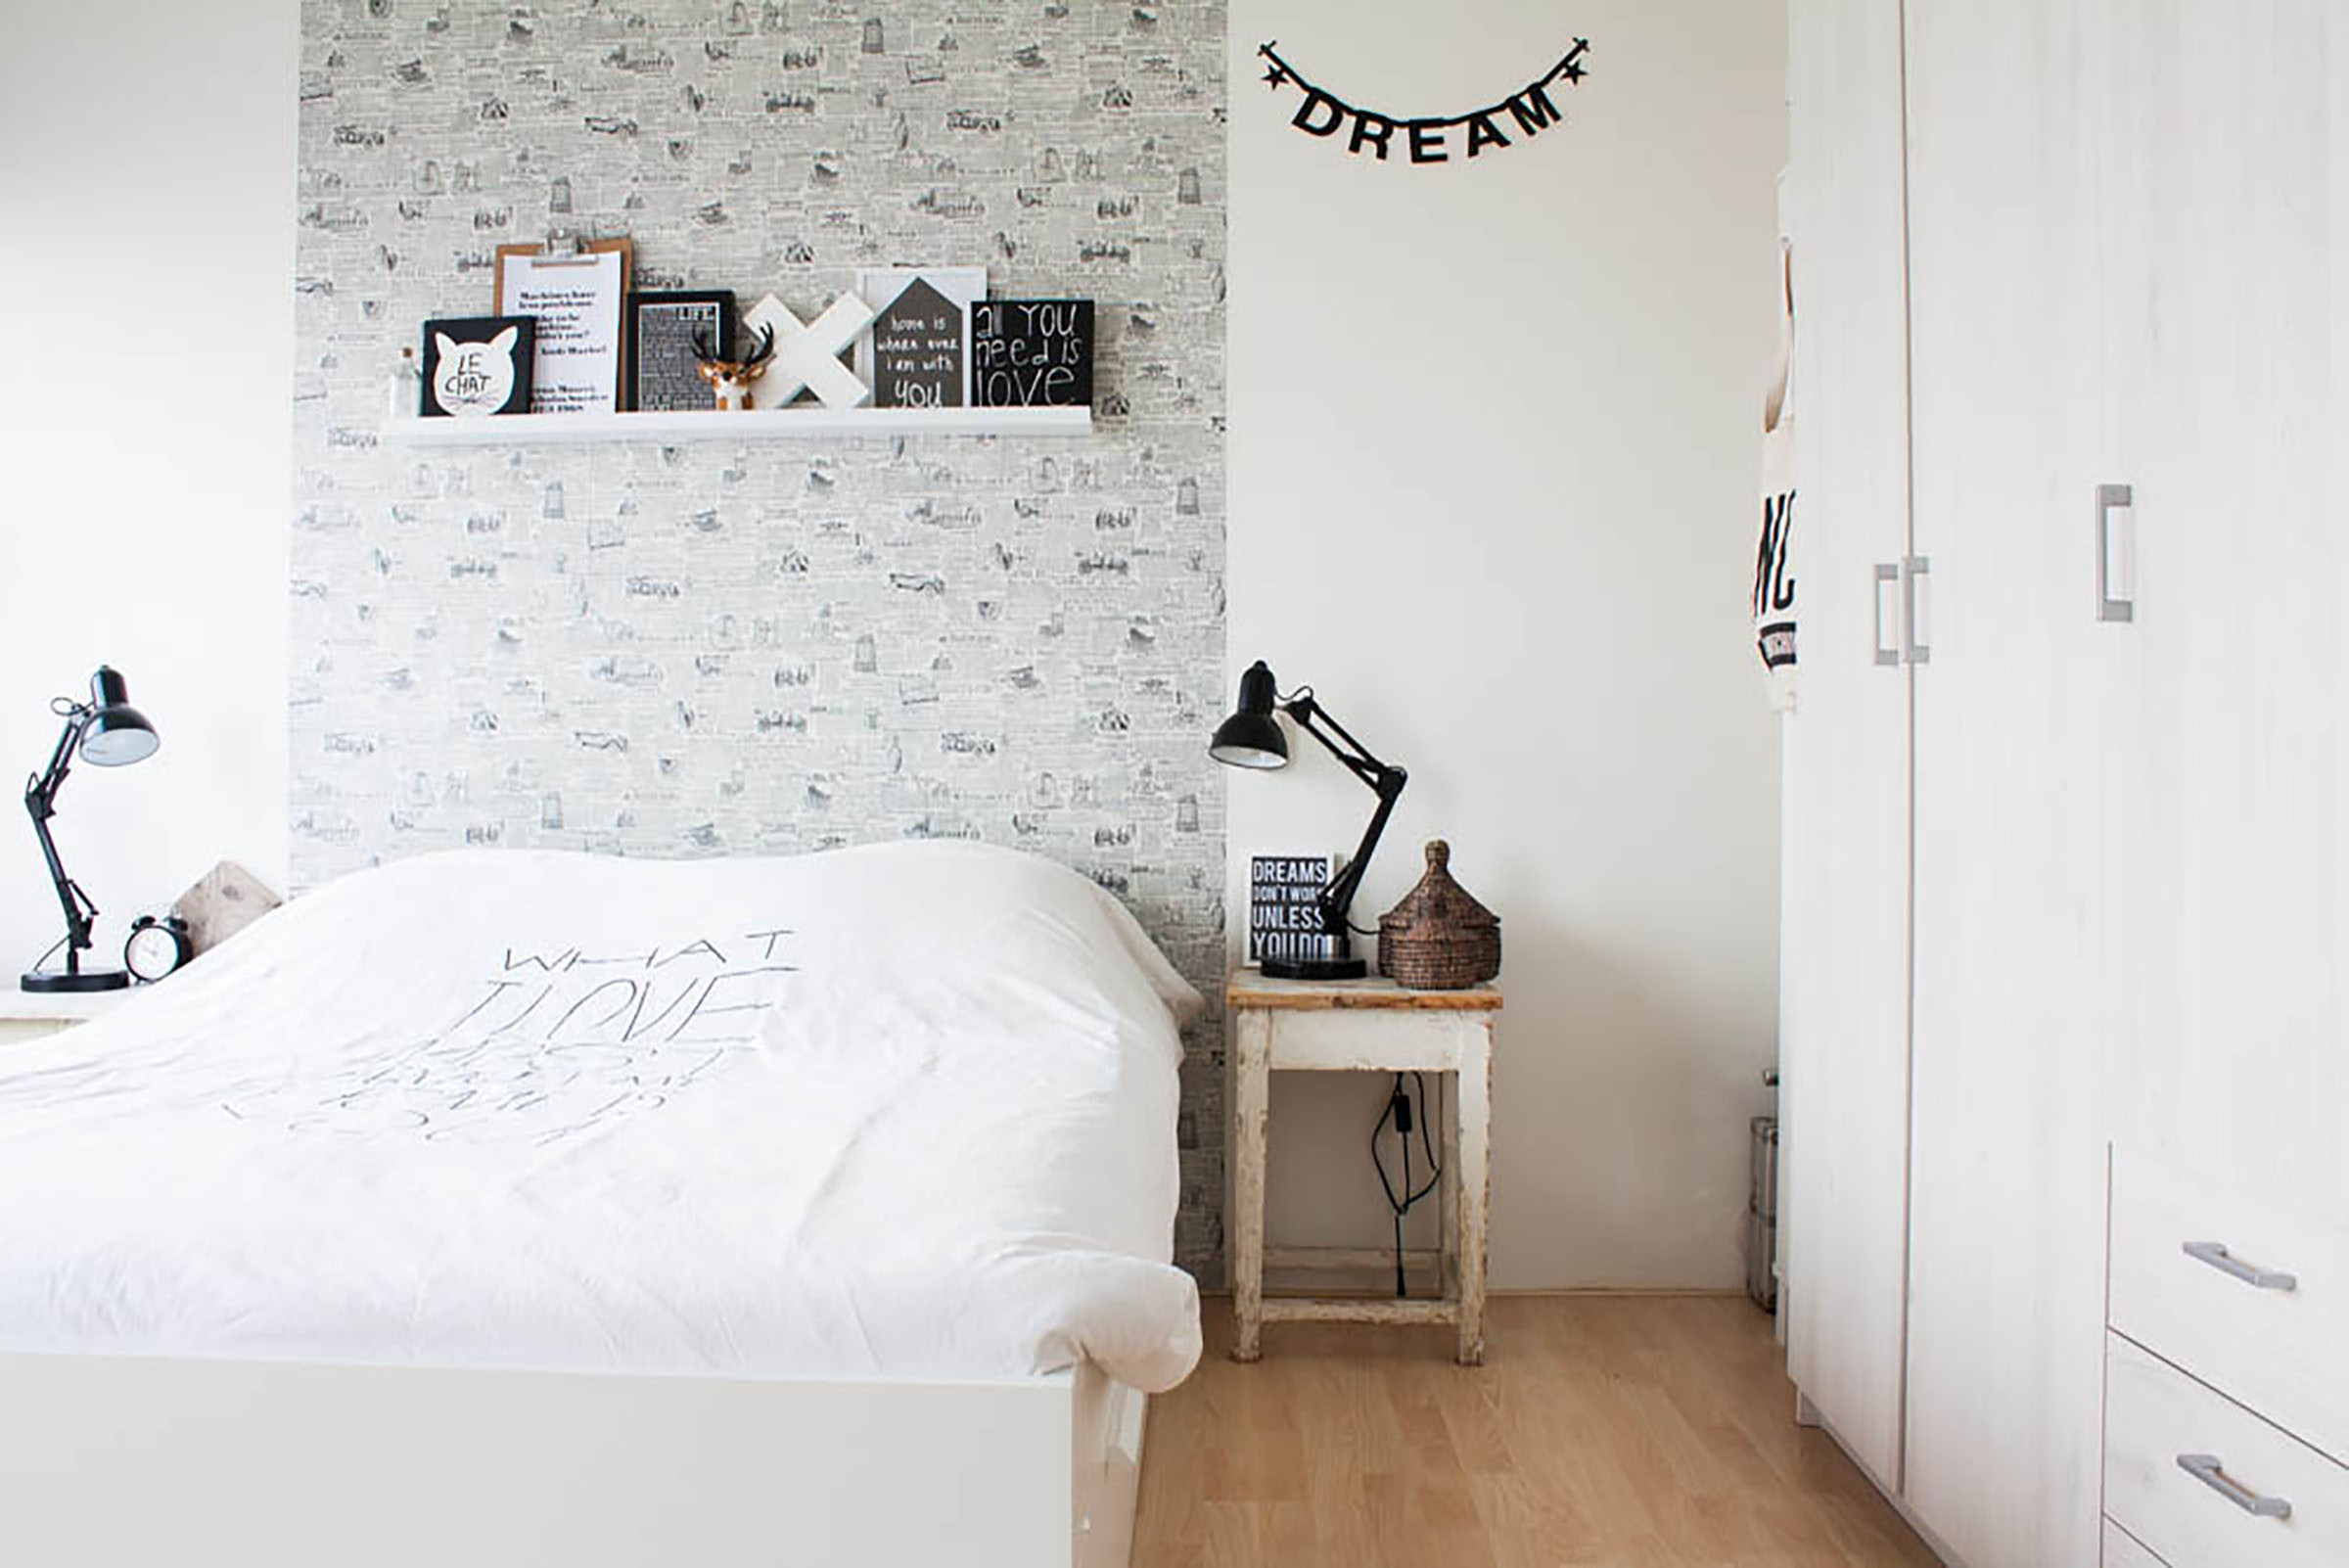 15 kreative Ideen für die Wand hinter dem Bett